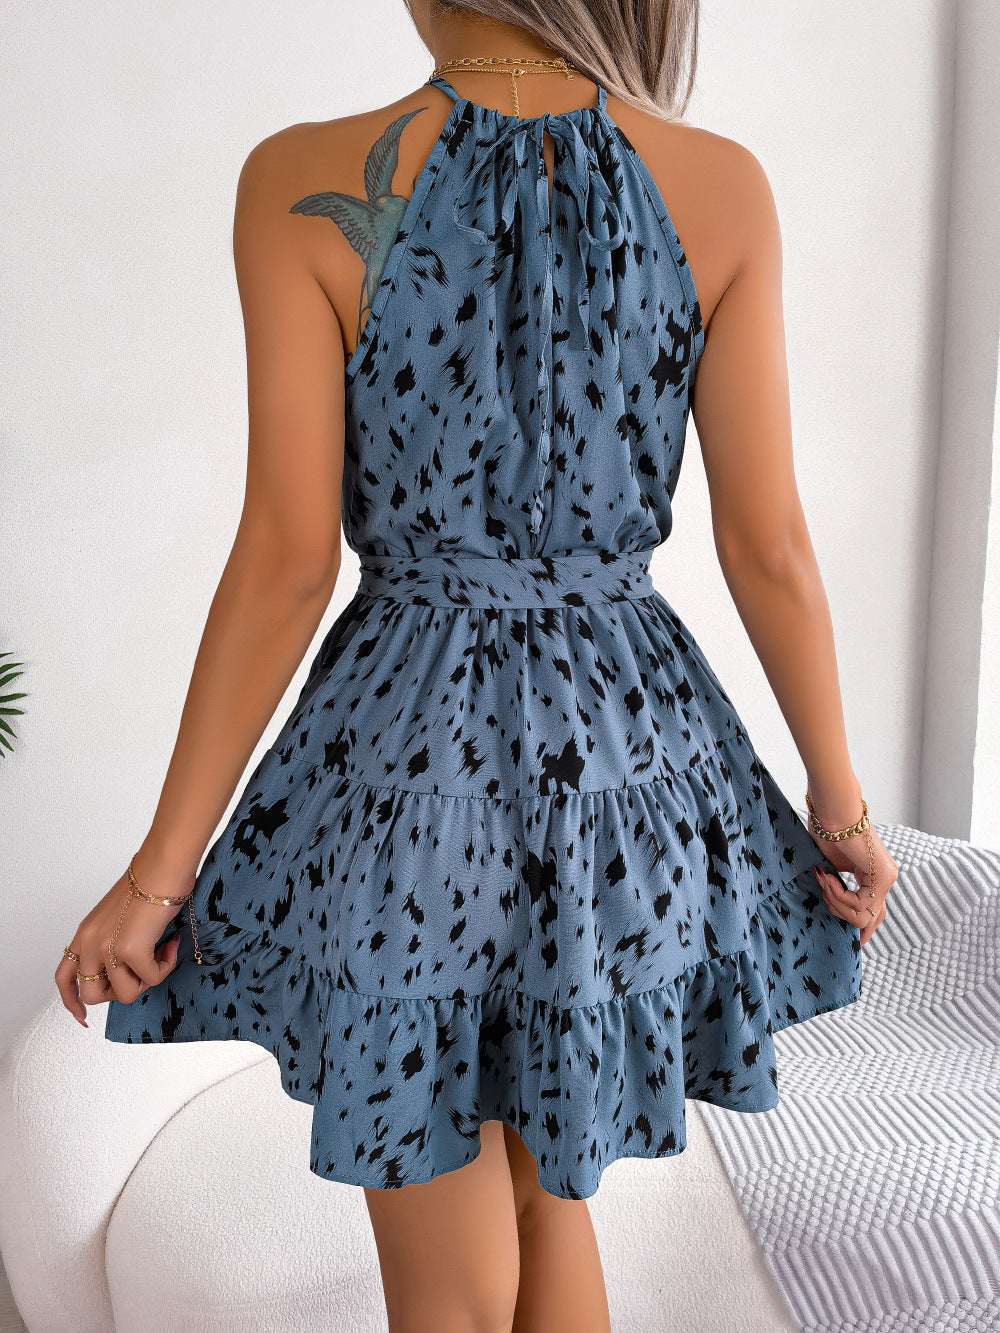 Casual Leopard Print Ruffled Swing Dress Summer Fashion Beach Dresses Women apparel & accessories